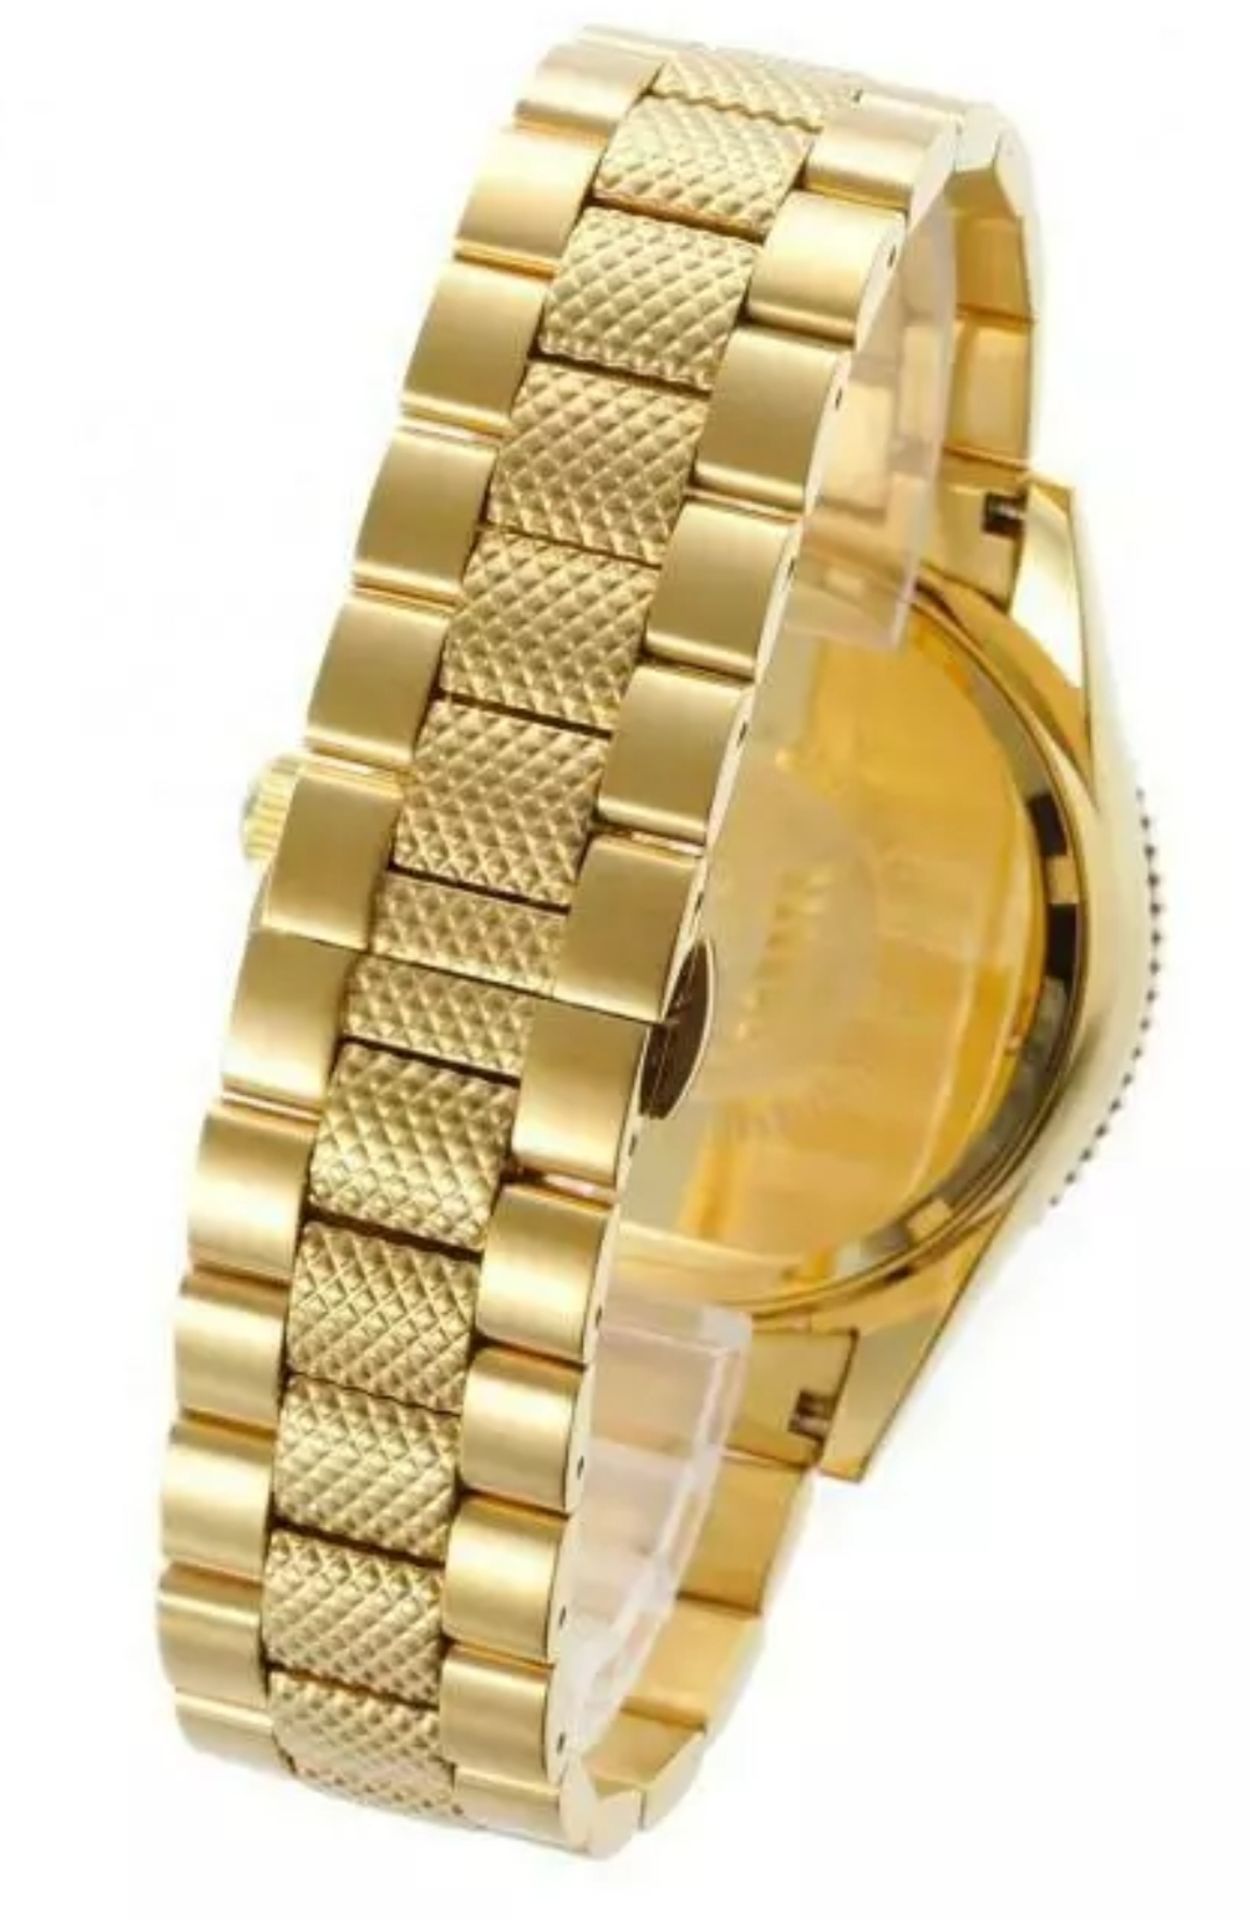 Emporio Armani AR5857 Black Dial Gold Tone Bracelet Quartz Chronograph Watch - Image 6 of 10